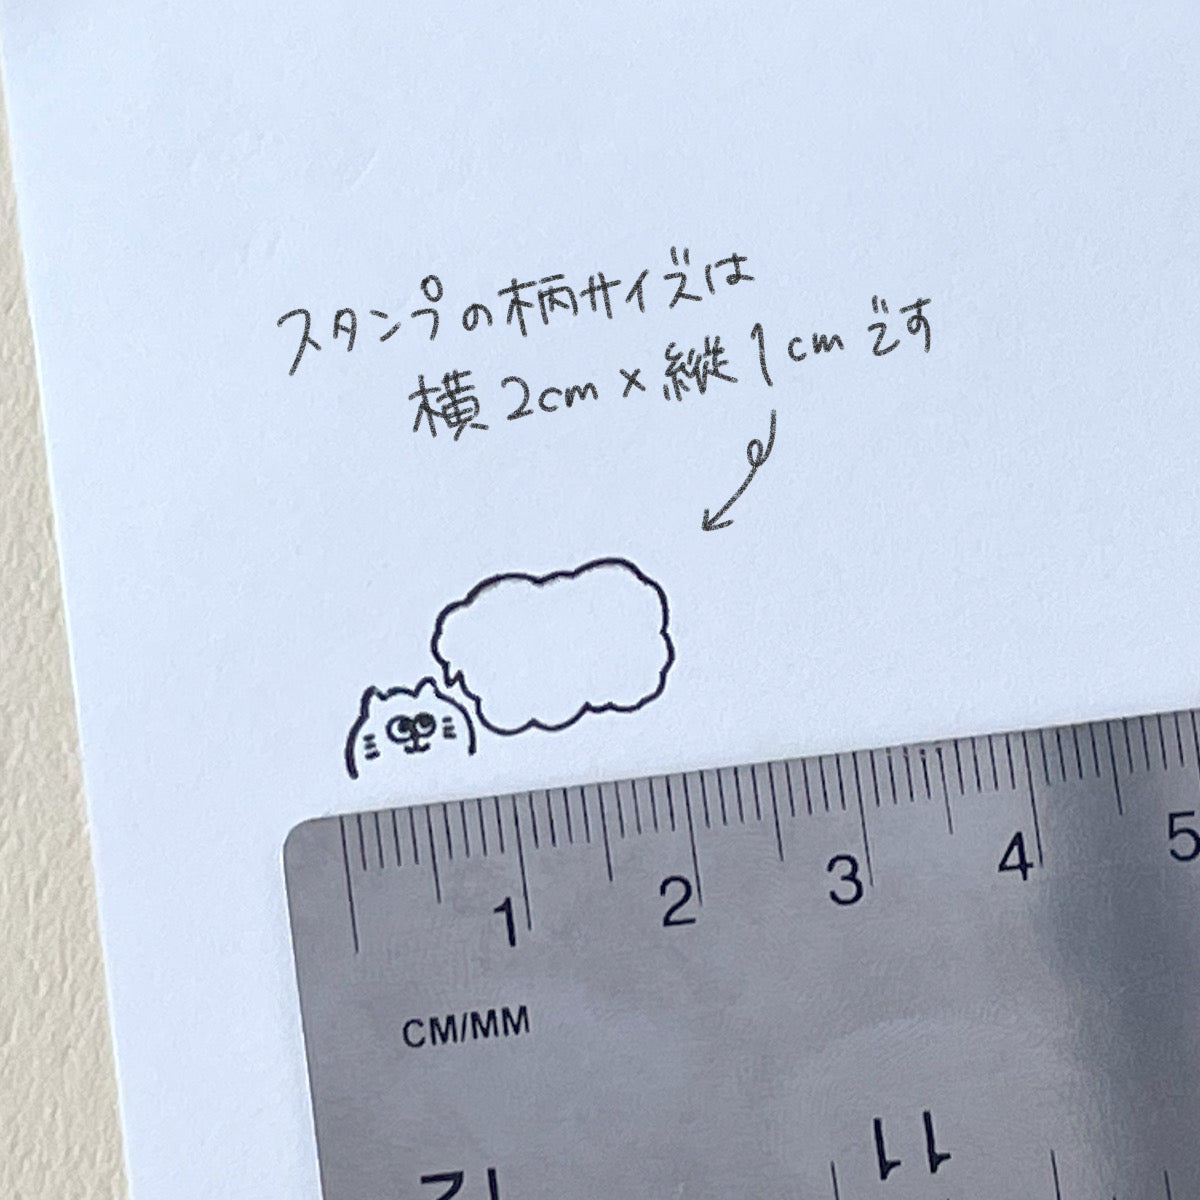 [Ten no Shigoto Dogu Shop Original] "Speech bubble" stamp (1 x 2 cm)